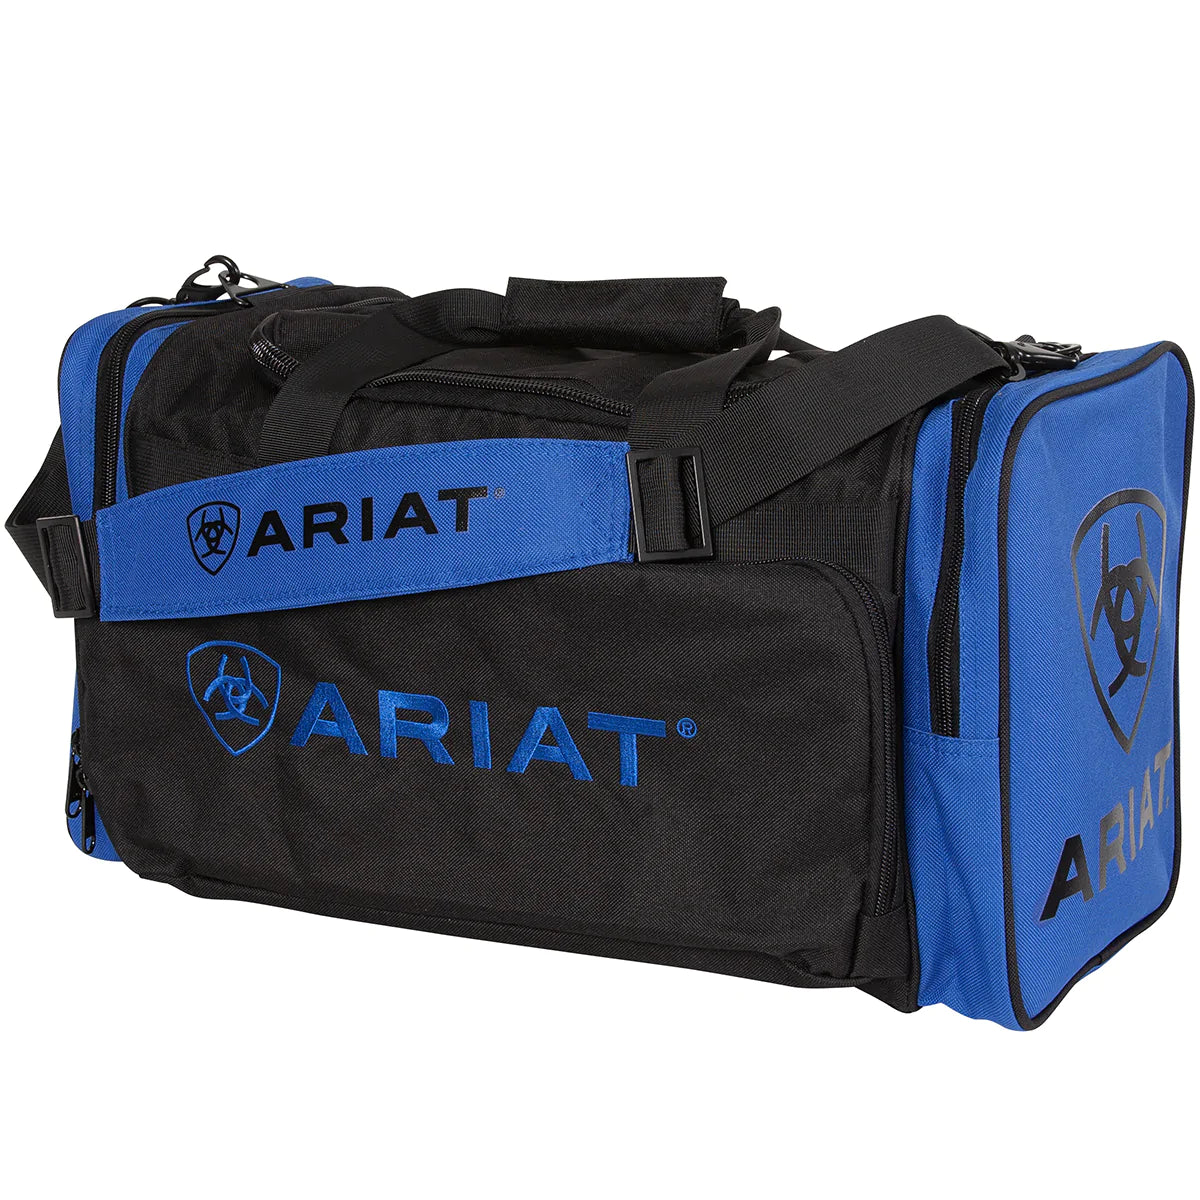 Ariat Junior Gear Bag Cobalt/Black